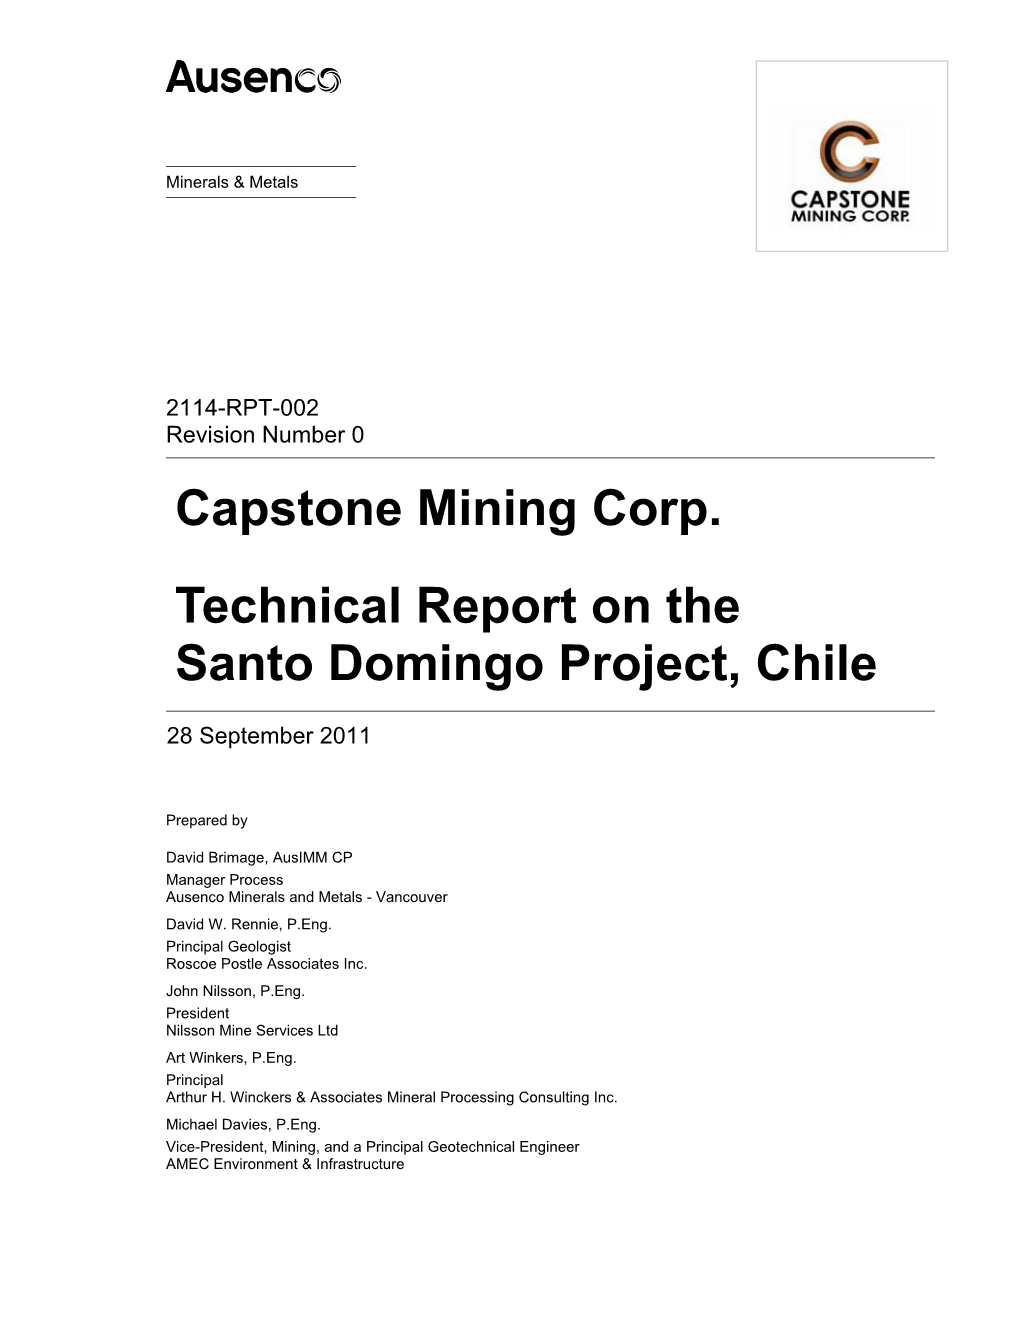 Capstone Mining Corp. Technical Report on the Santo Domingo Project, Chile